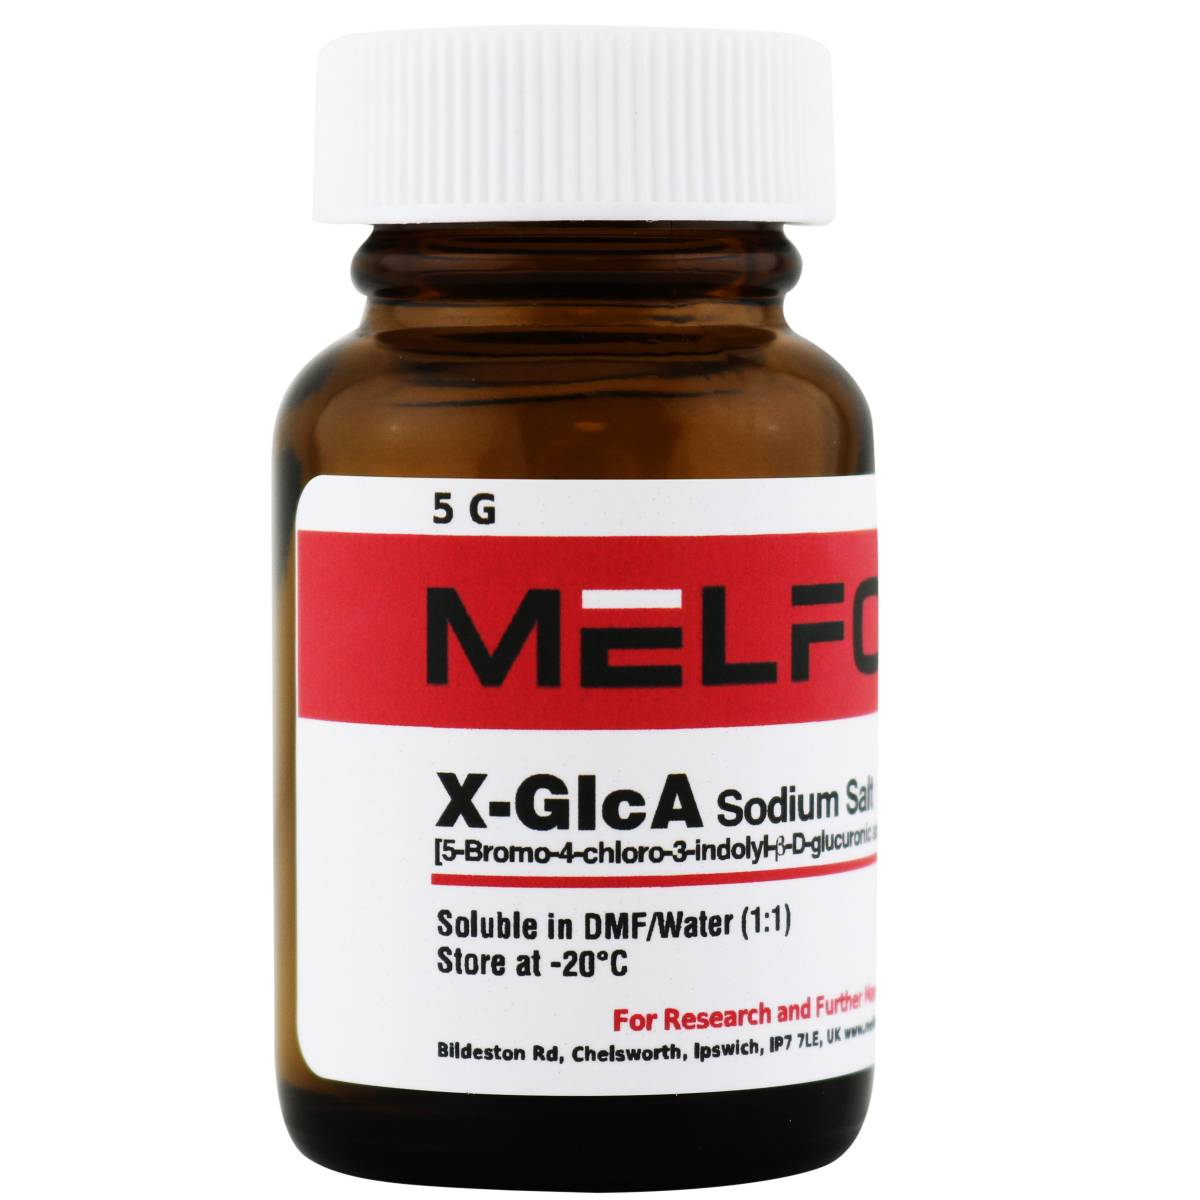 X-GlcA Sodium Salt [5-Bromo-4-chloro-3-indolyl-β-D-glucuronic acid, sodium salt trihydrate], 5 Gram